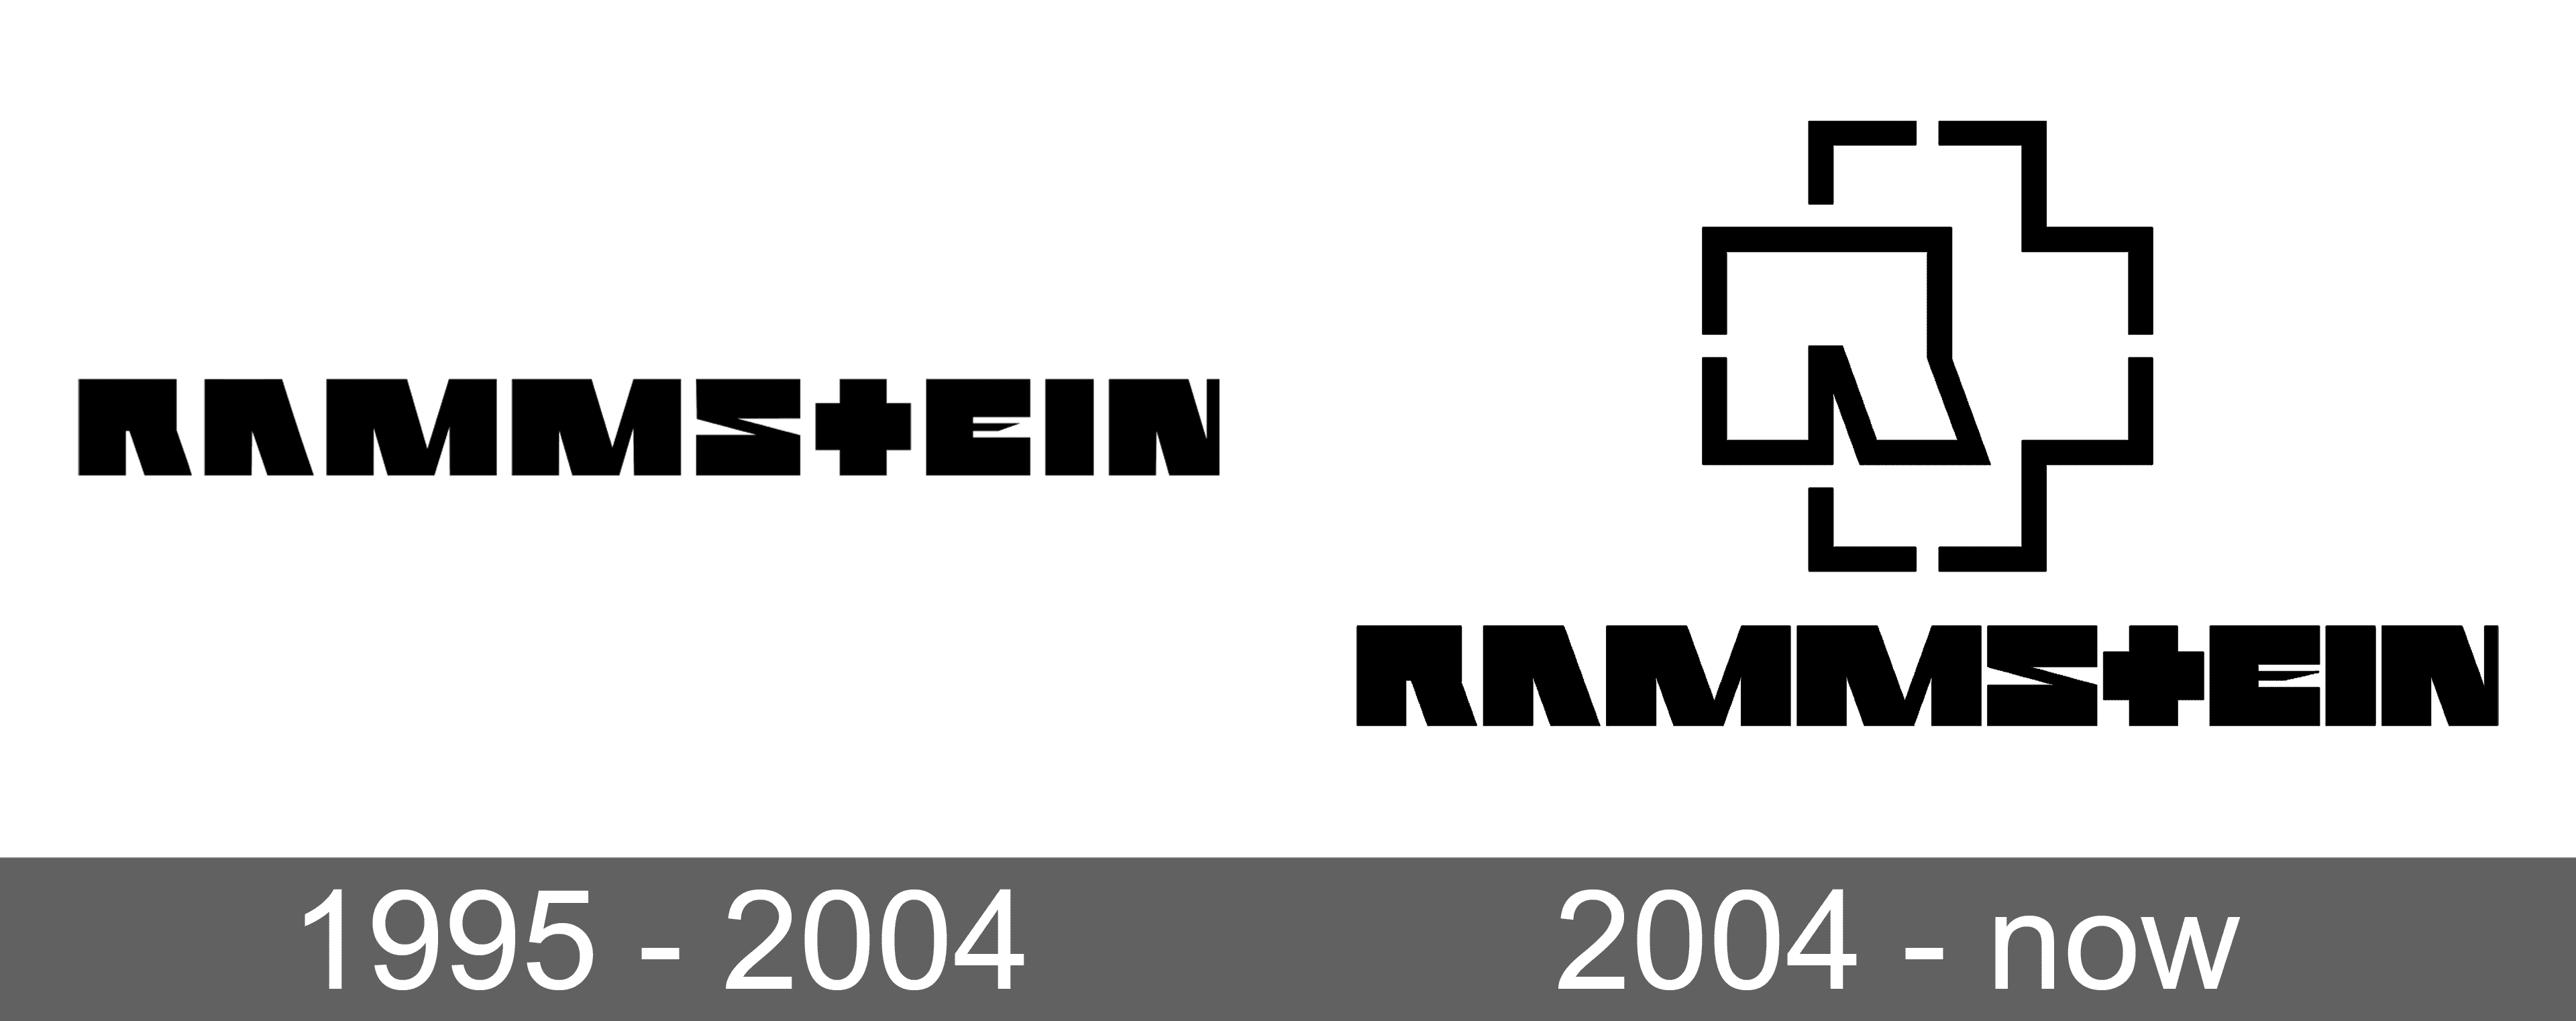 rammstein-logo-music-logonoid